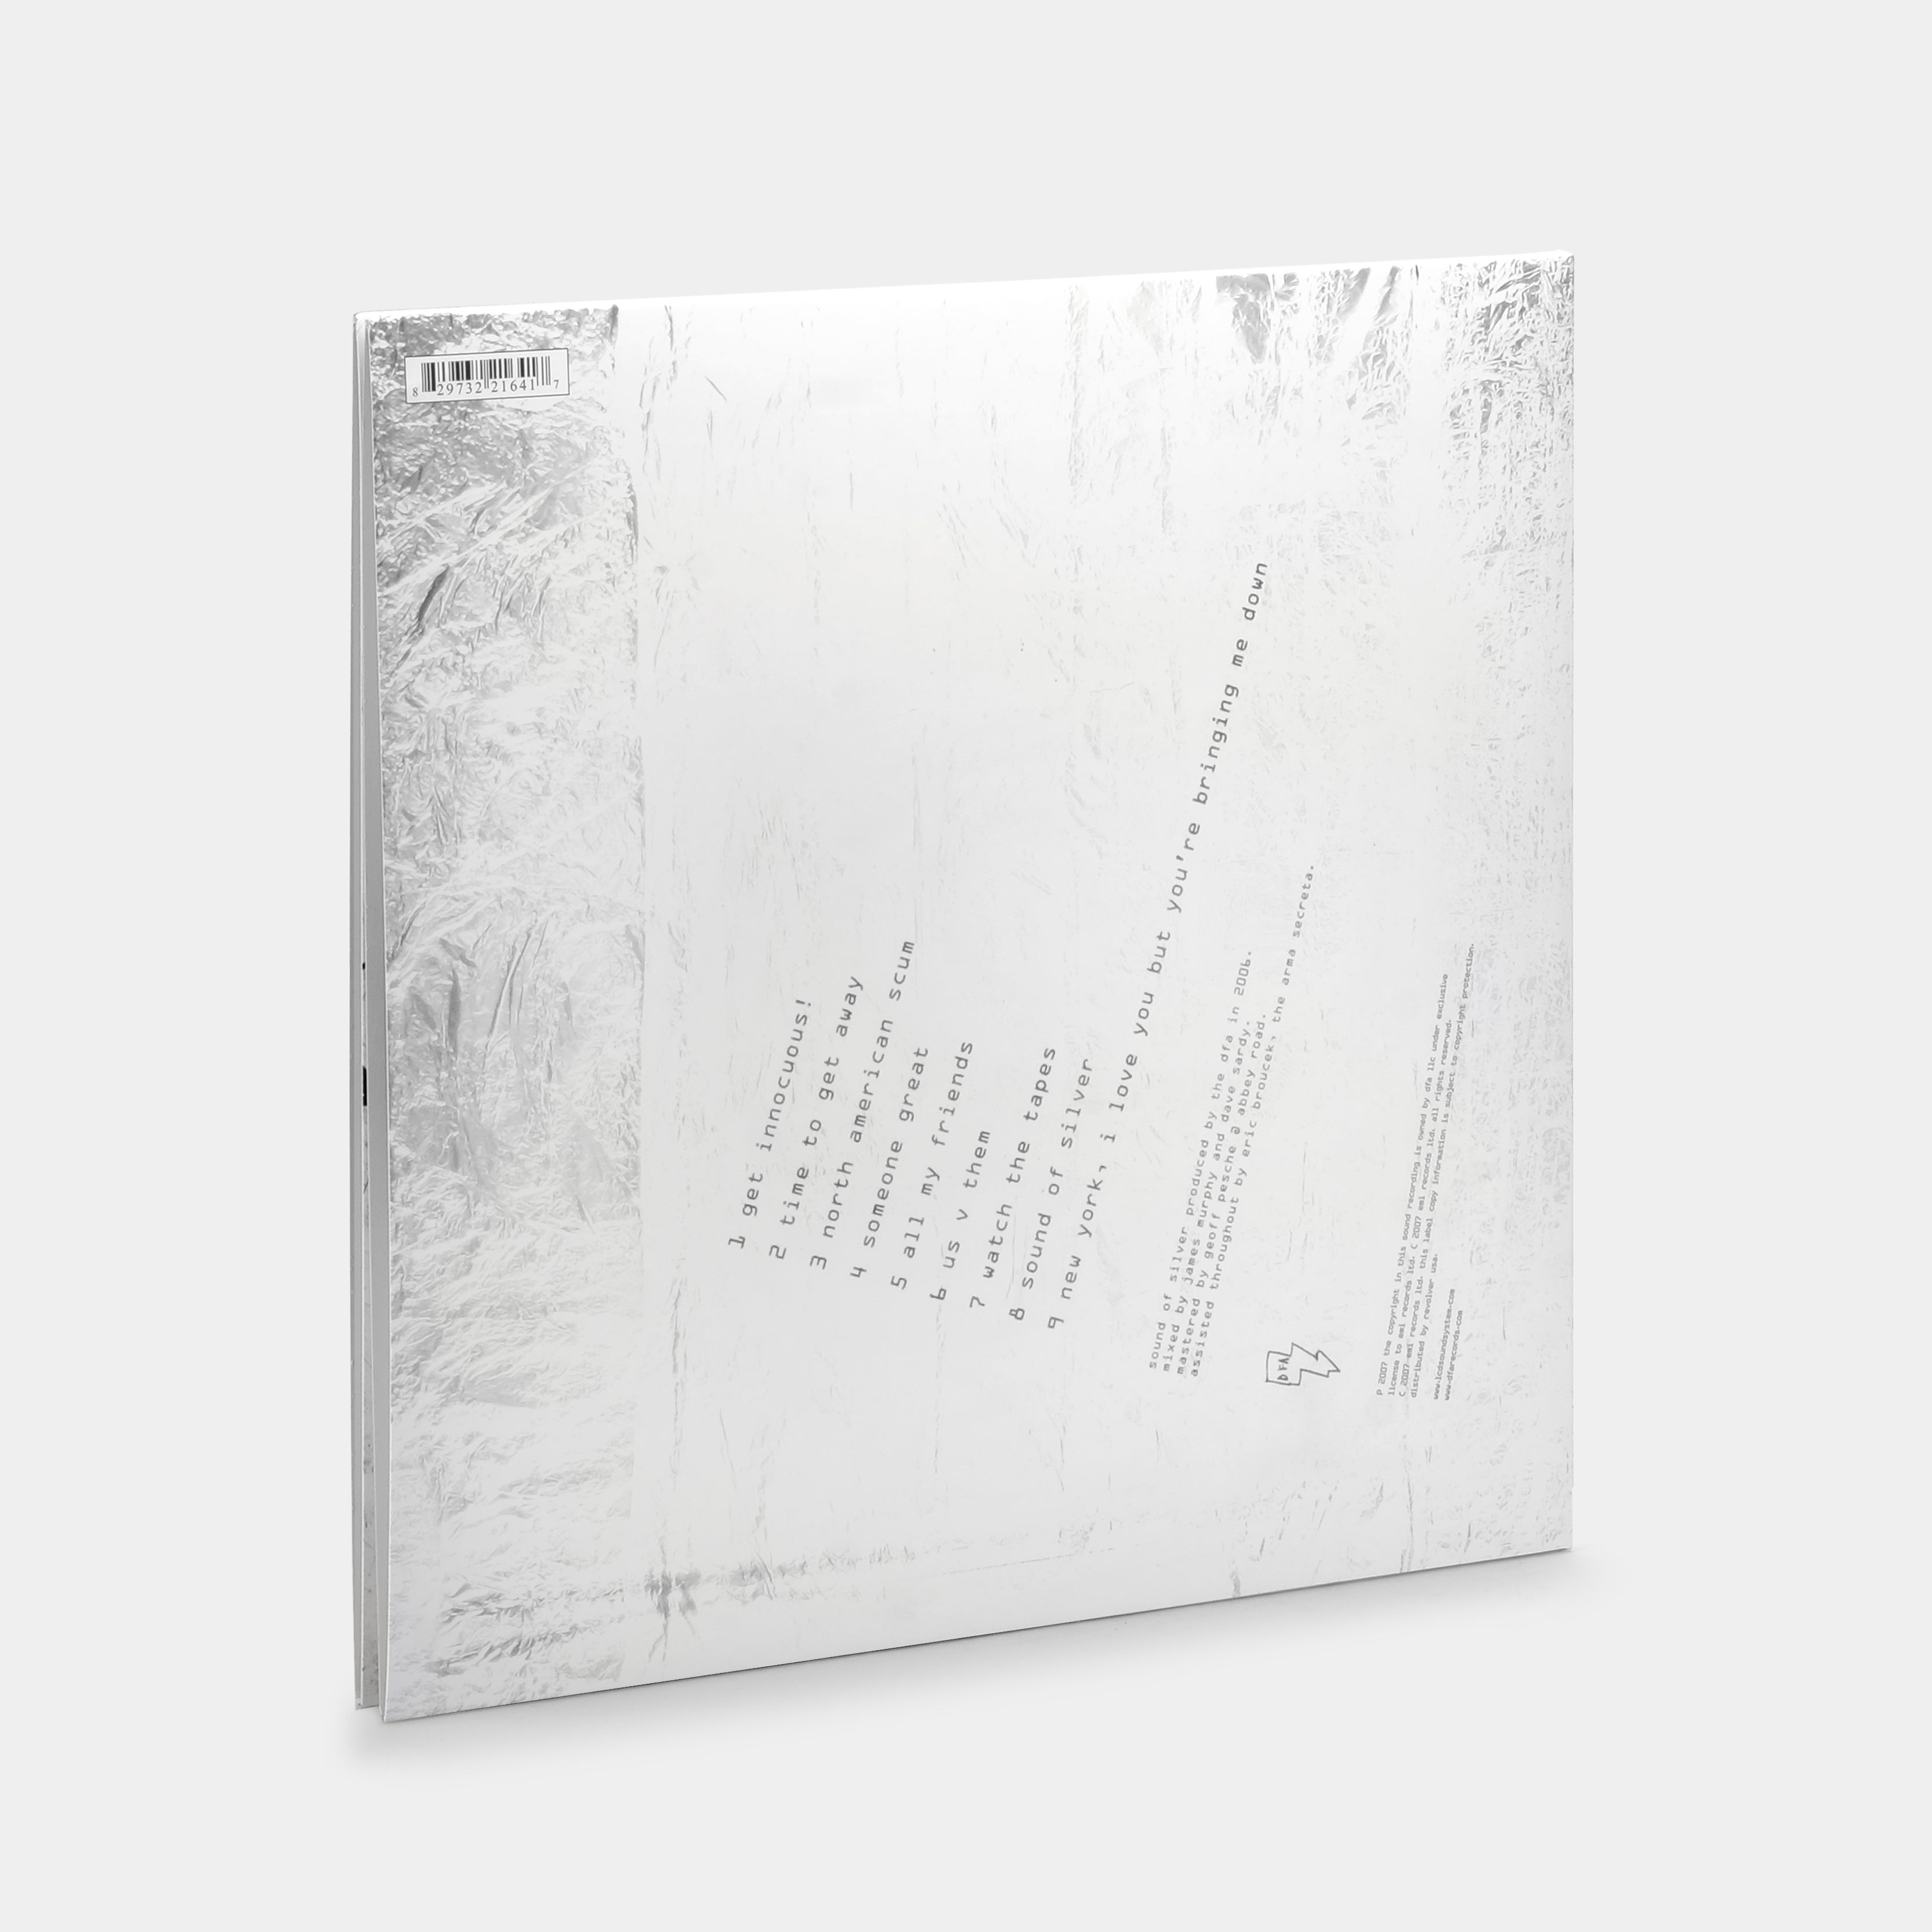 LCD Soundsystem - Sound Of Silver 2xLP Vinyl Record